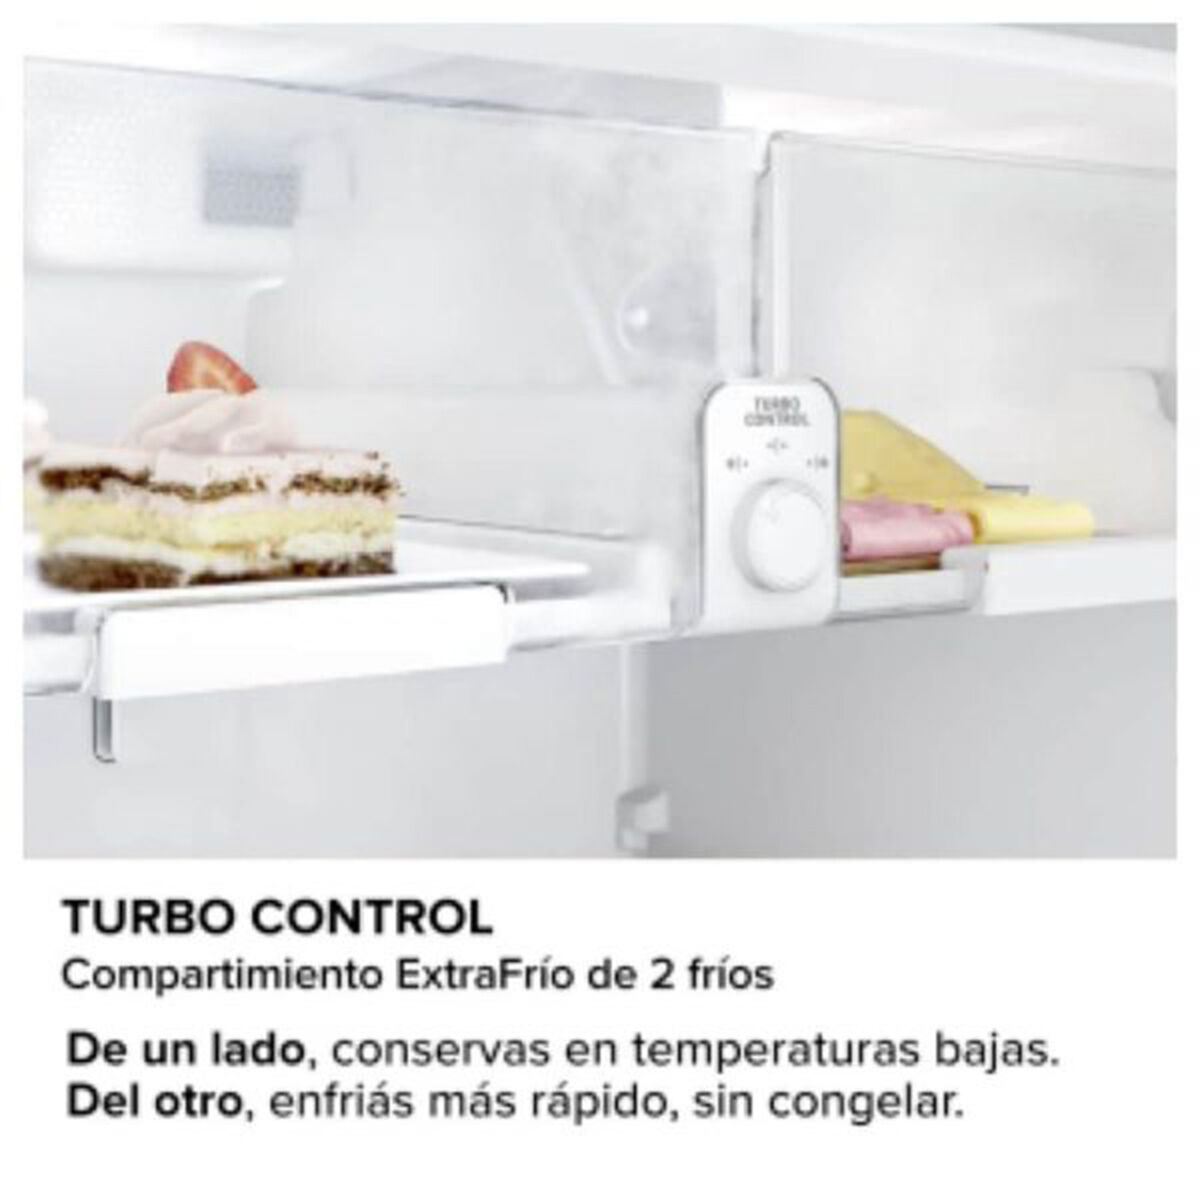 Refrigerador No Frost Whirlpool WRM56AK 462 lts.